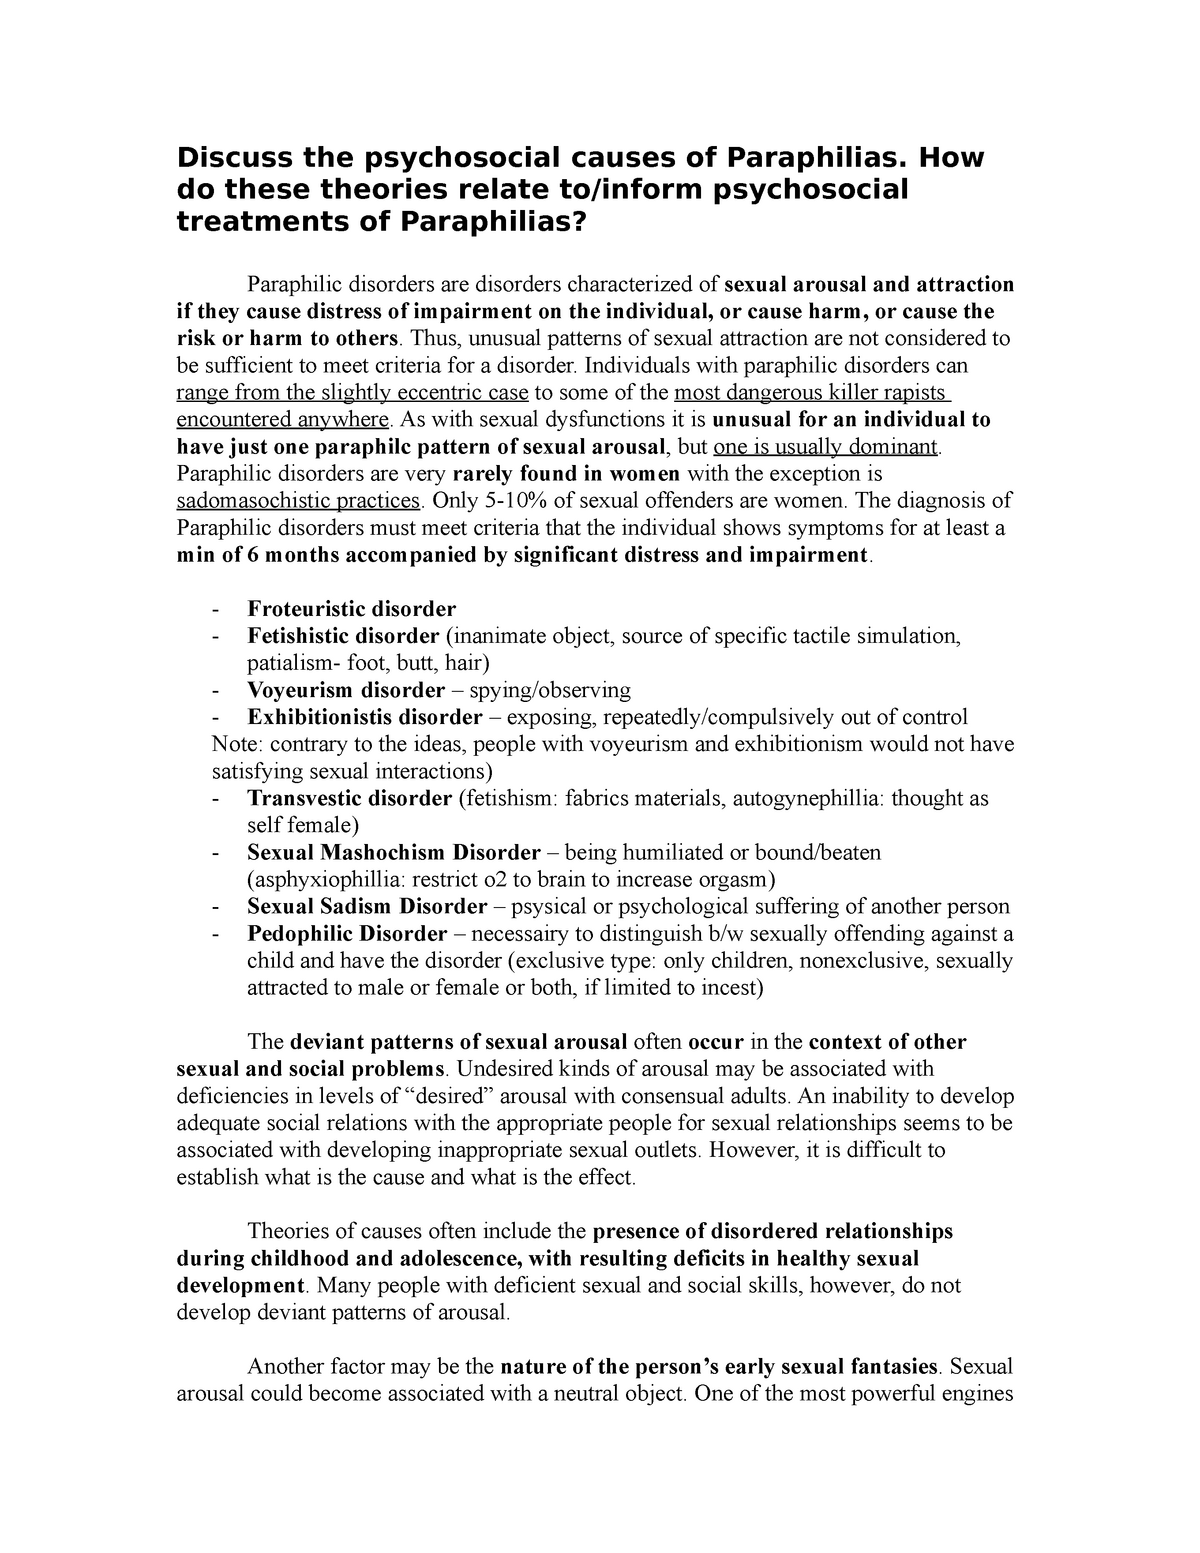 Paraphillias essay - Grade a - Discuss the psychosocial causes of Paraphilias picture